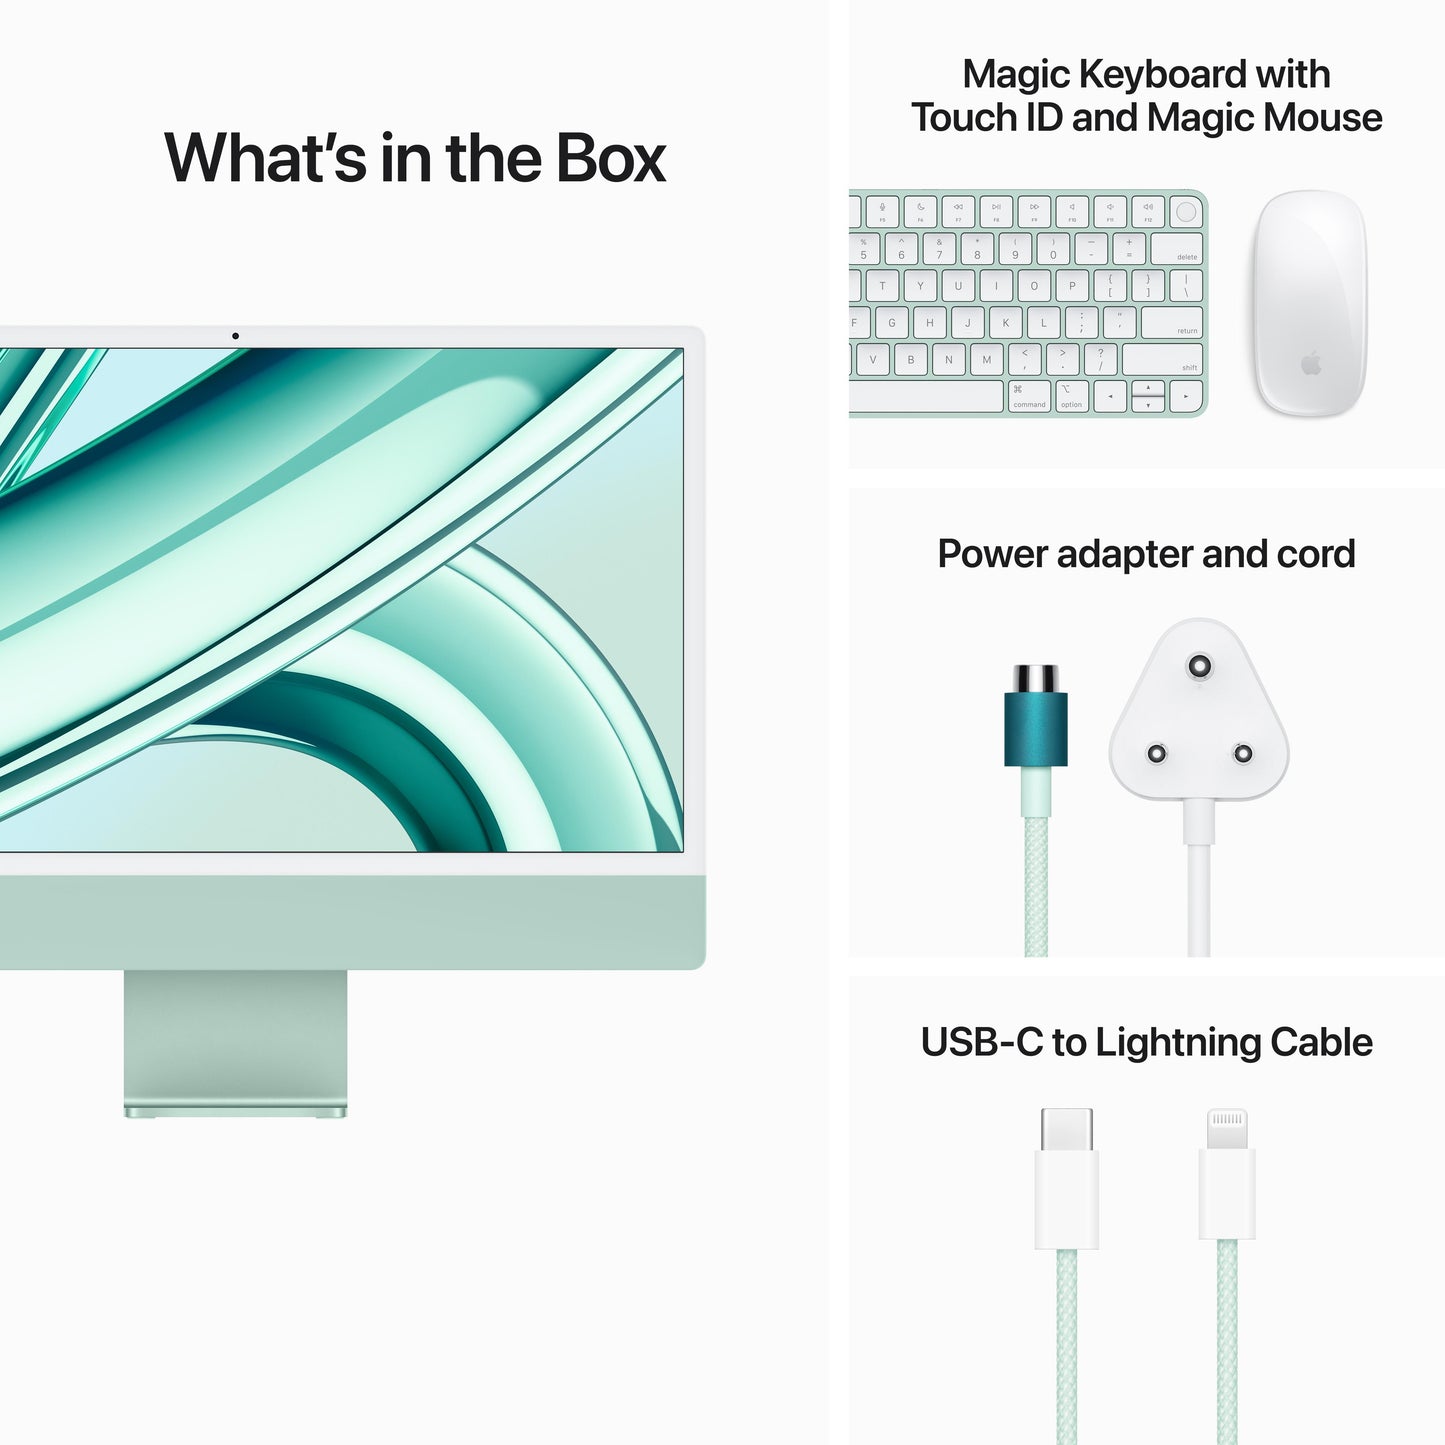 24-inch iMac with Retina 4.5K display: Apple M3 chip with 8‑core CPU and 10‑core GPU, 256GB SSD - Green